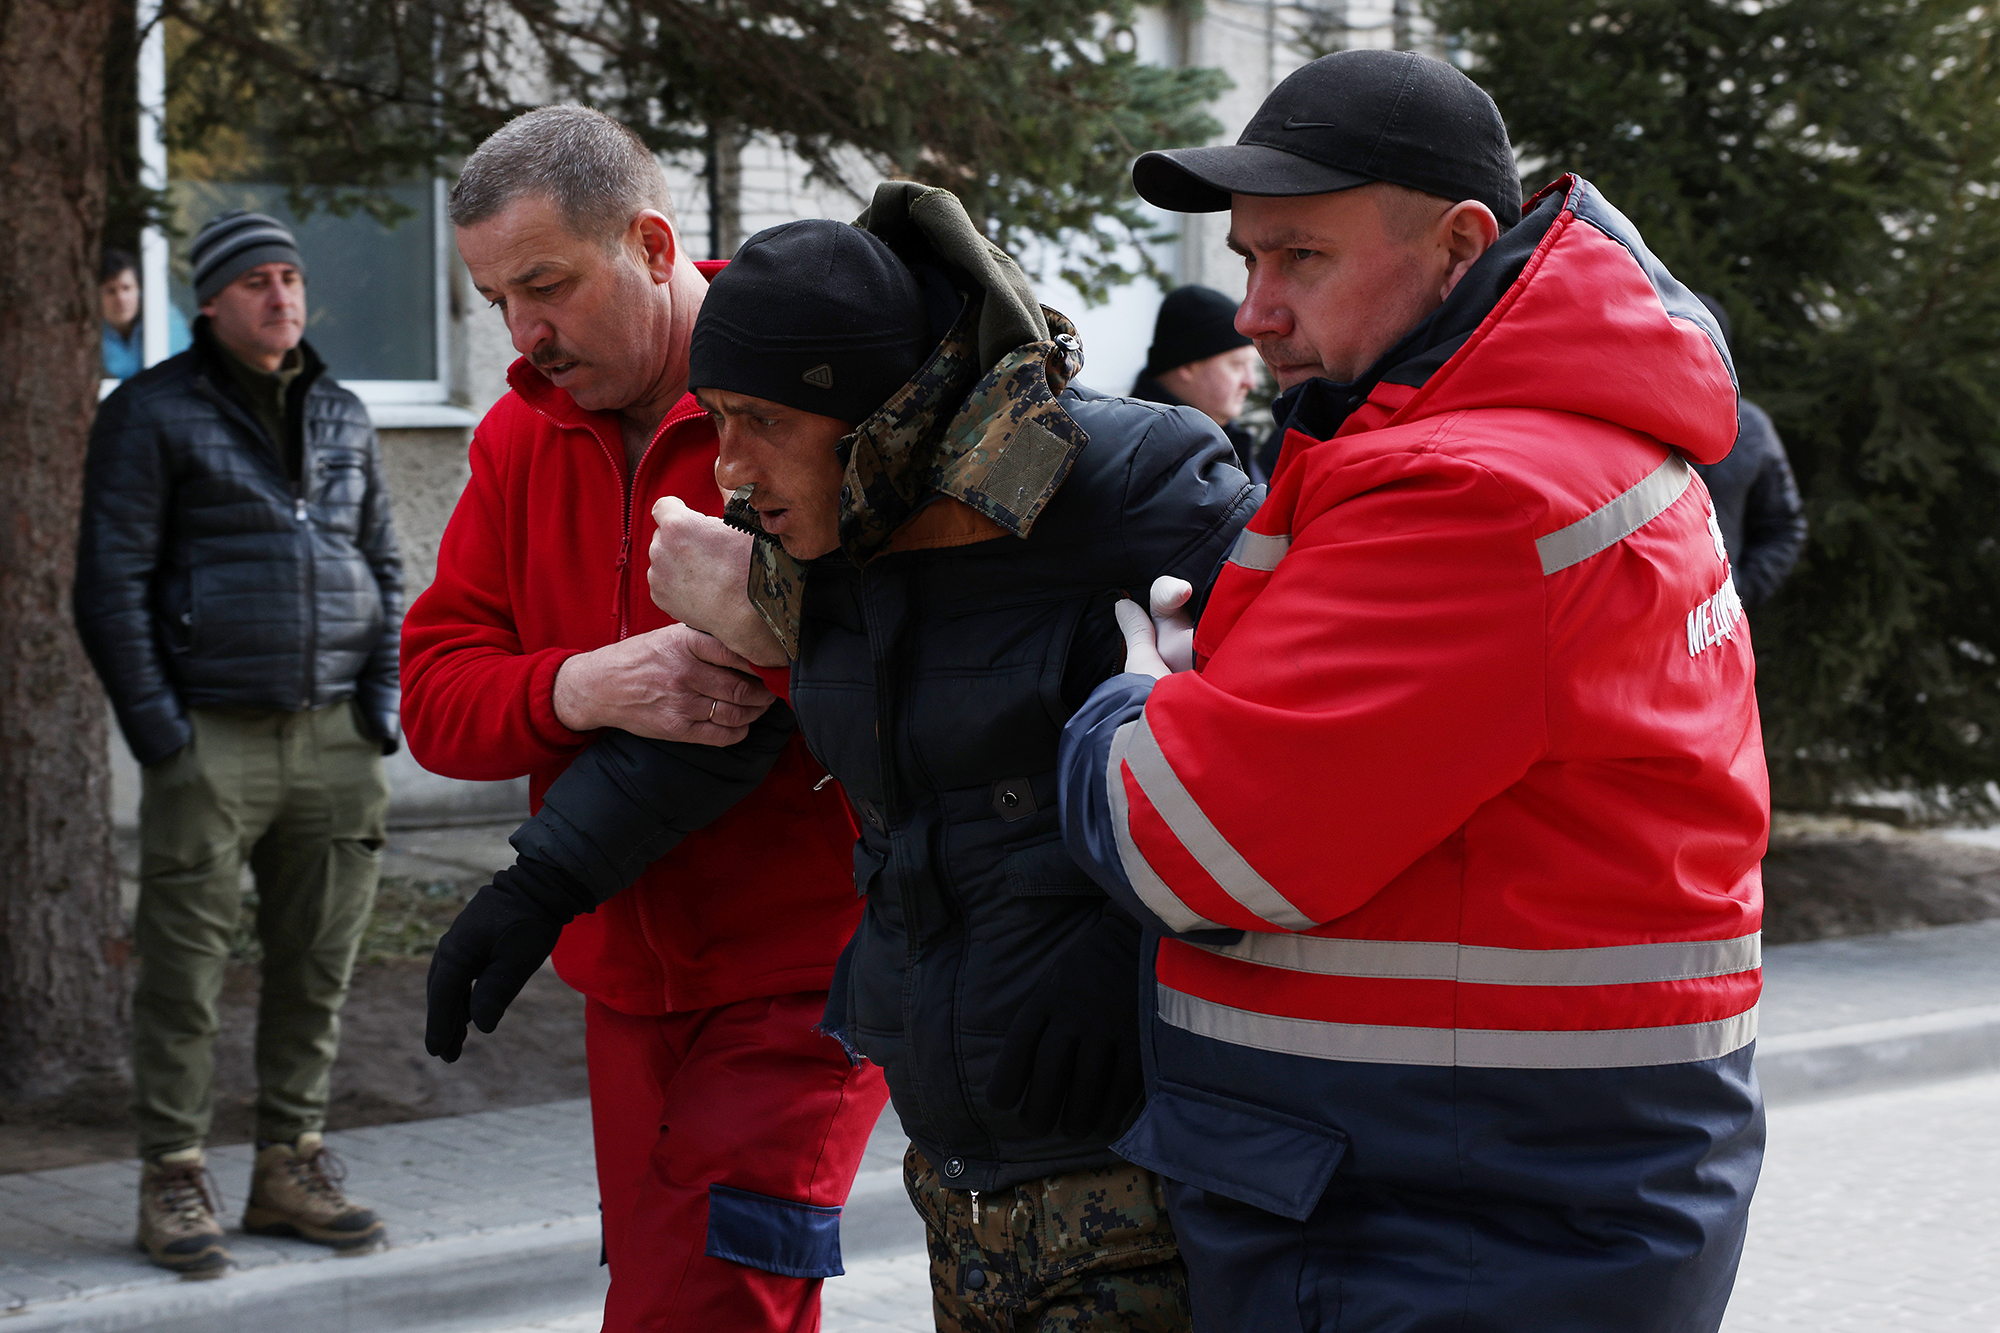 A patient is assisted by medical staff as he arrives at Novoiavorivsk District Hospital on March 13, 2022 in Novoiavorivsk, Ukraine.